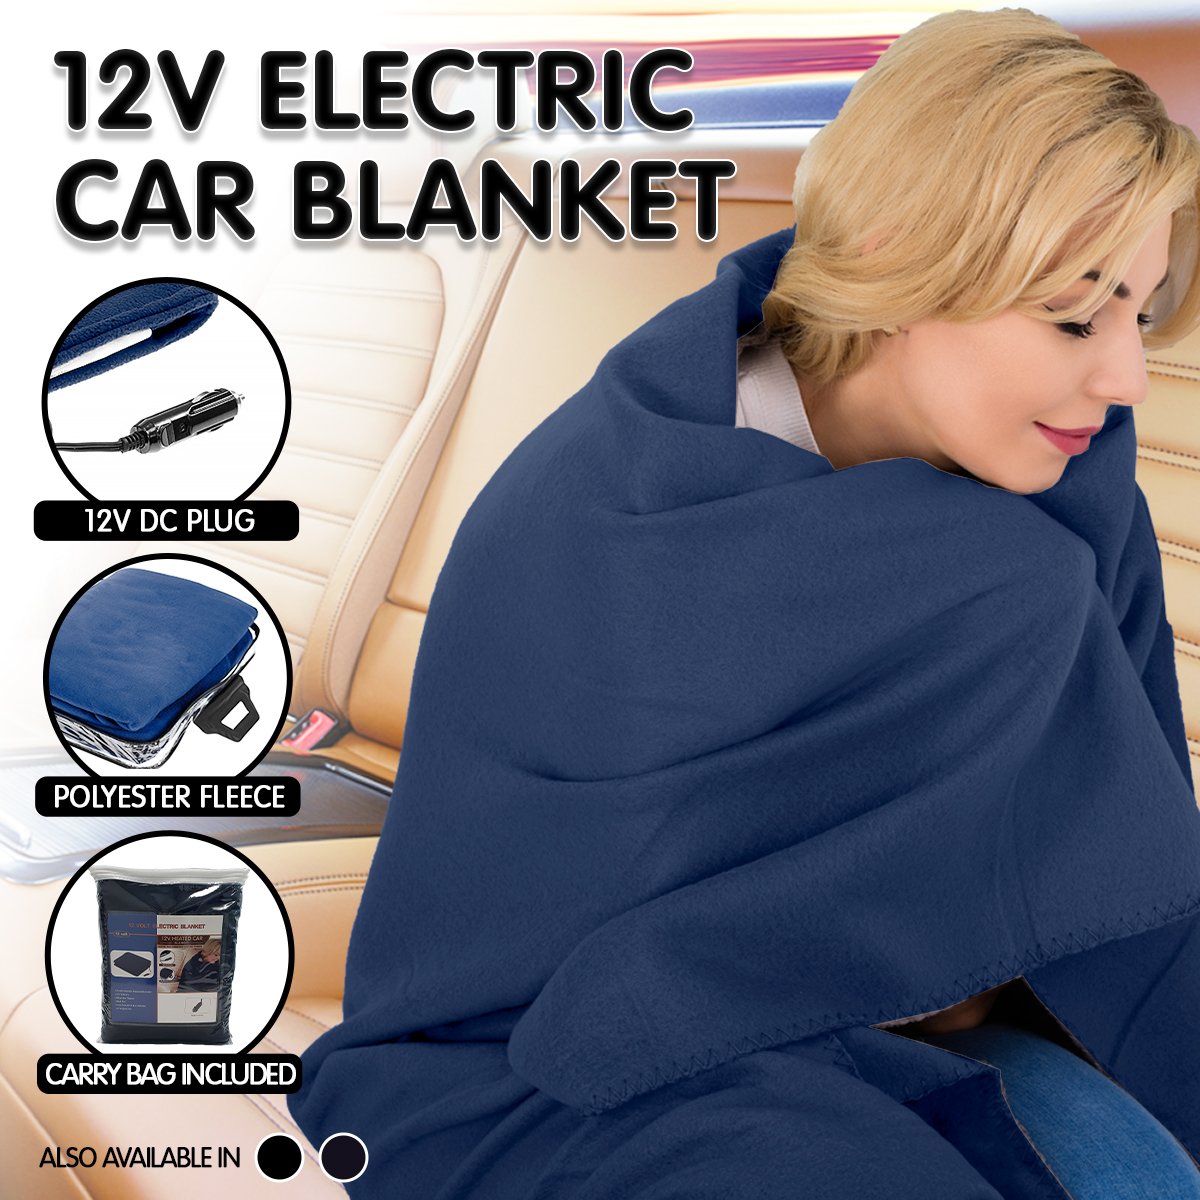 Heated Electric Car Blanket 150x110cm 12V - Navy Blue 1